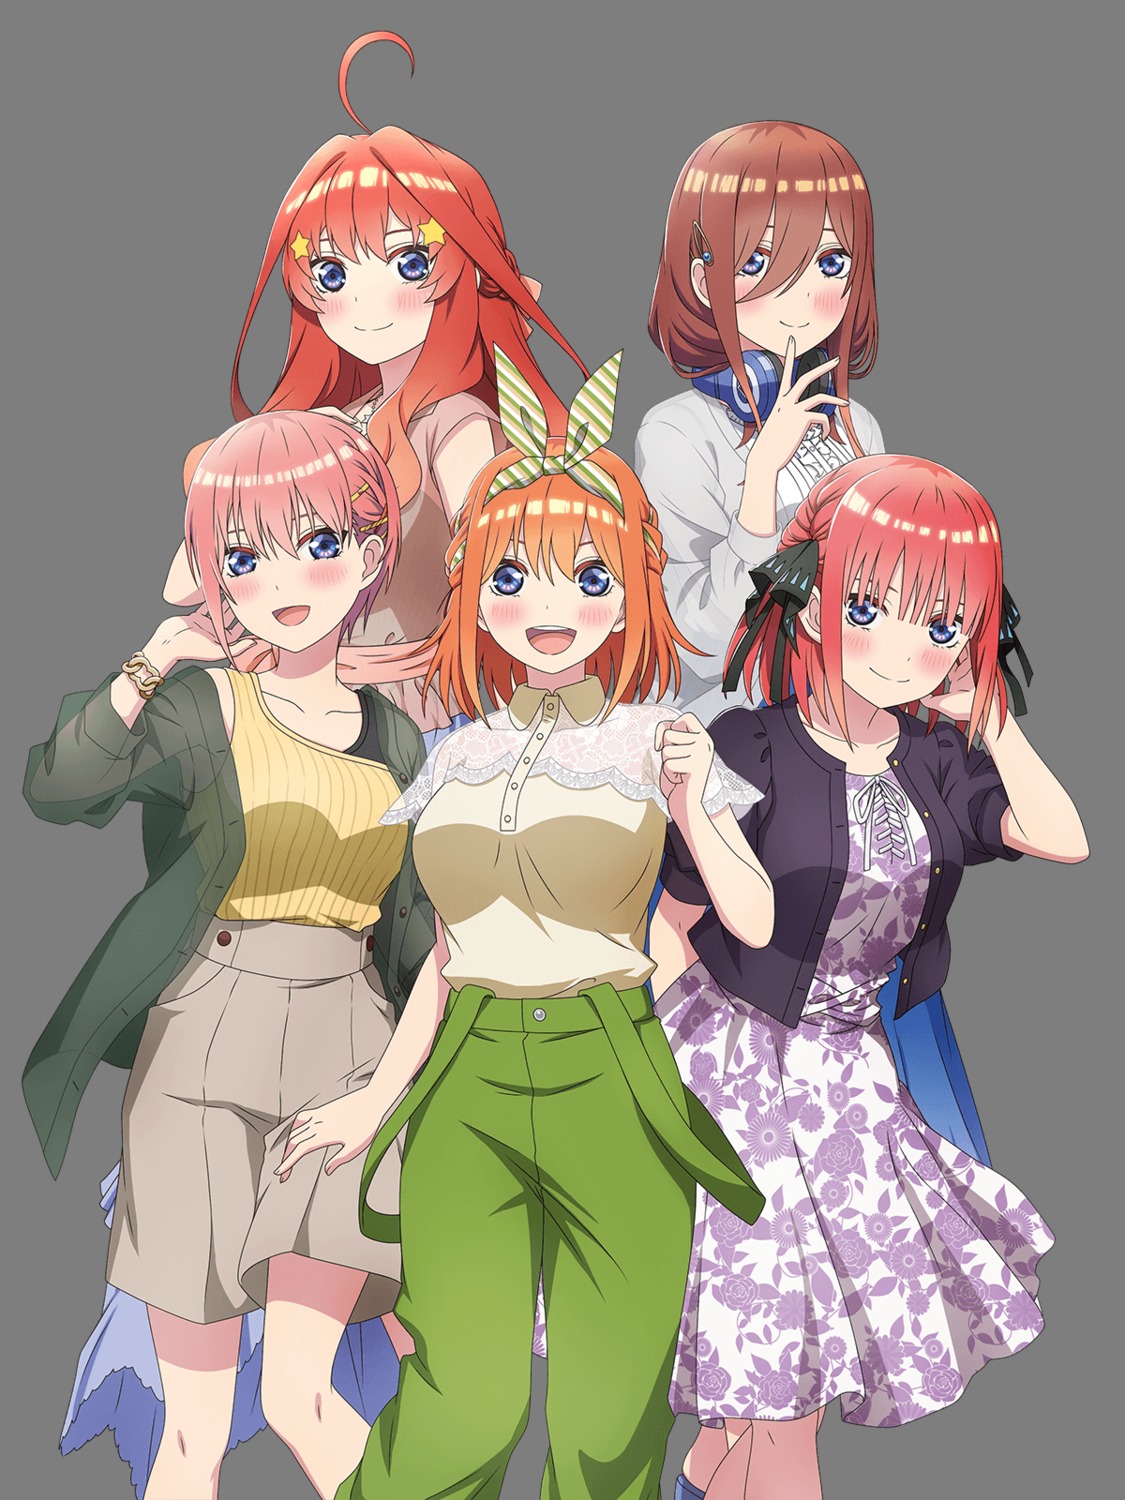 The Quintessential Quintuplets, 5Toubun no Hanayome Wiki